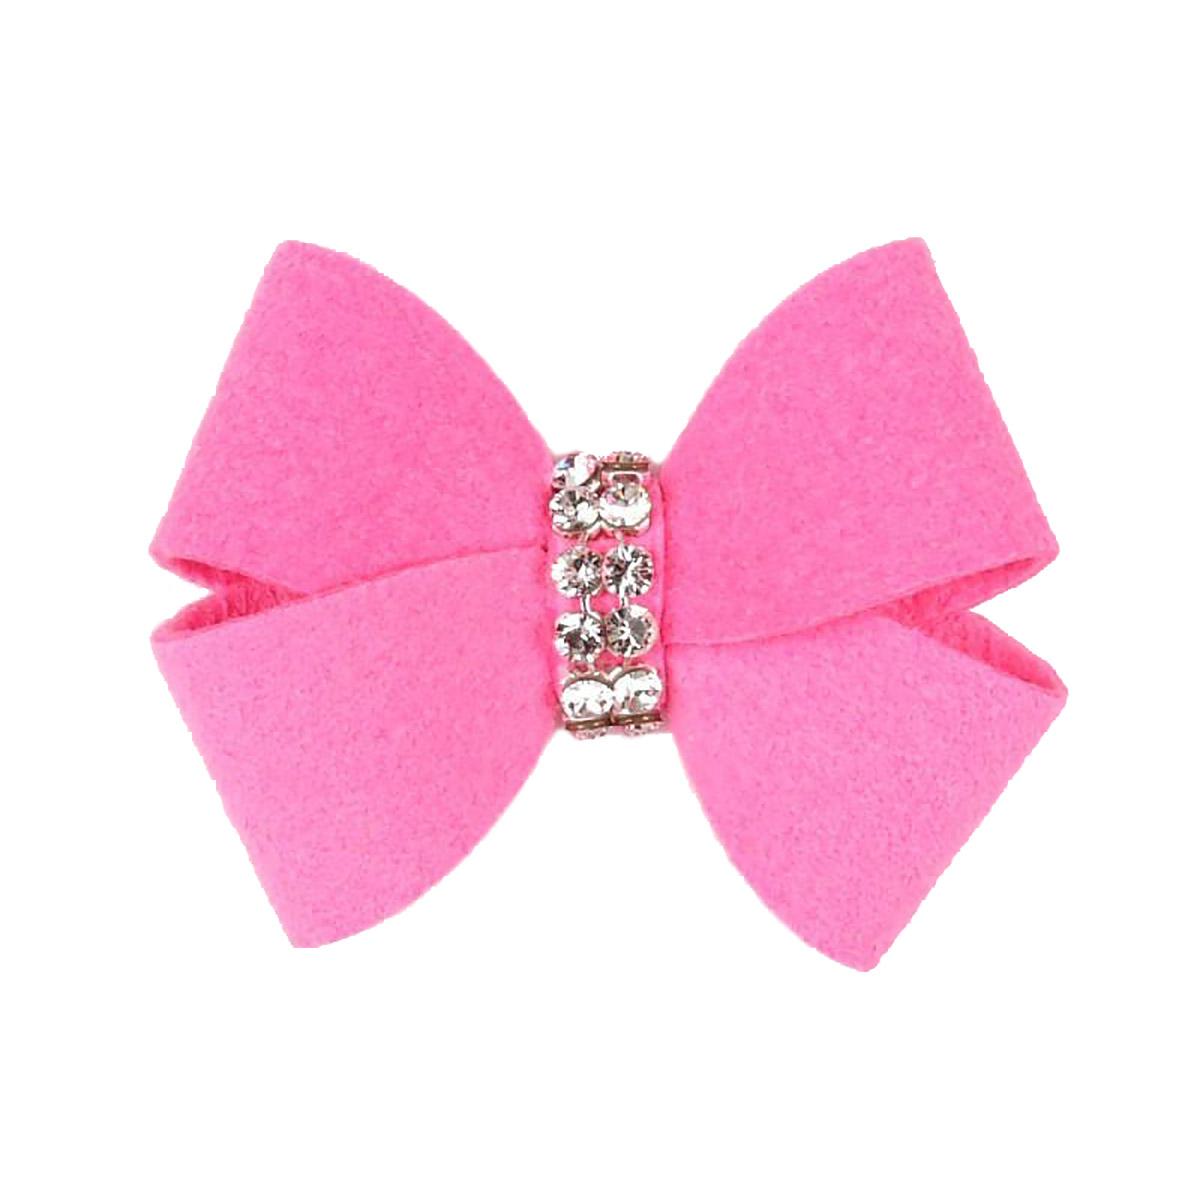 Nouveau Bow Dog Hair Bow by Susan Lanci - Perfect Pink